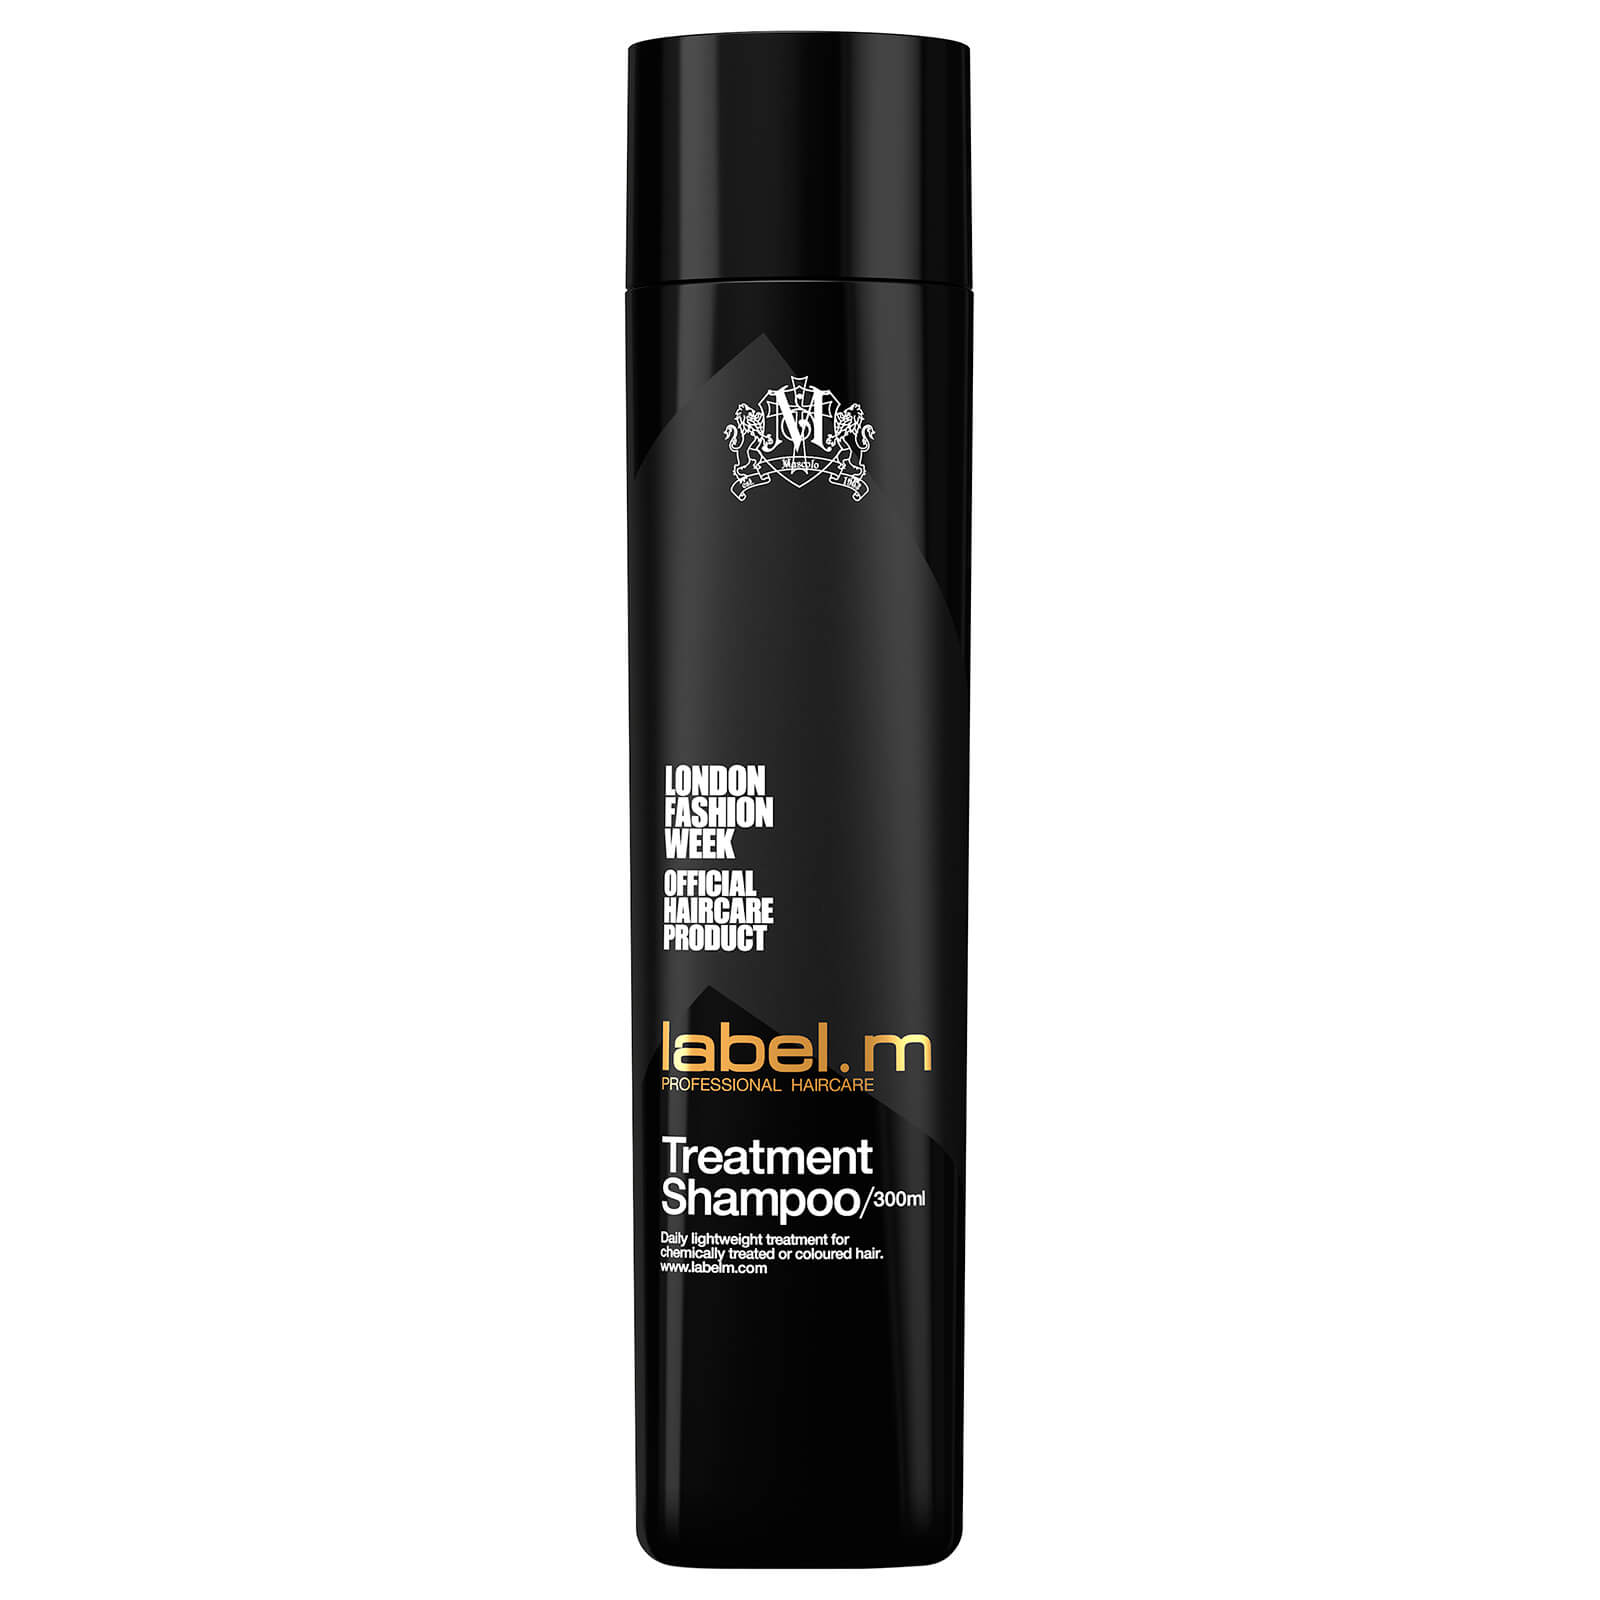 Shampoo Label with Logo - label.m Treatment Shampoo (300ml)